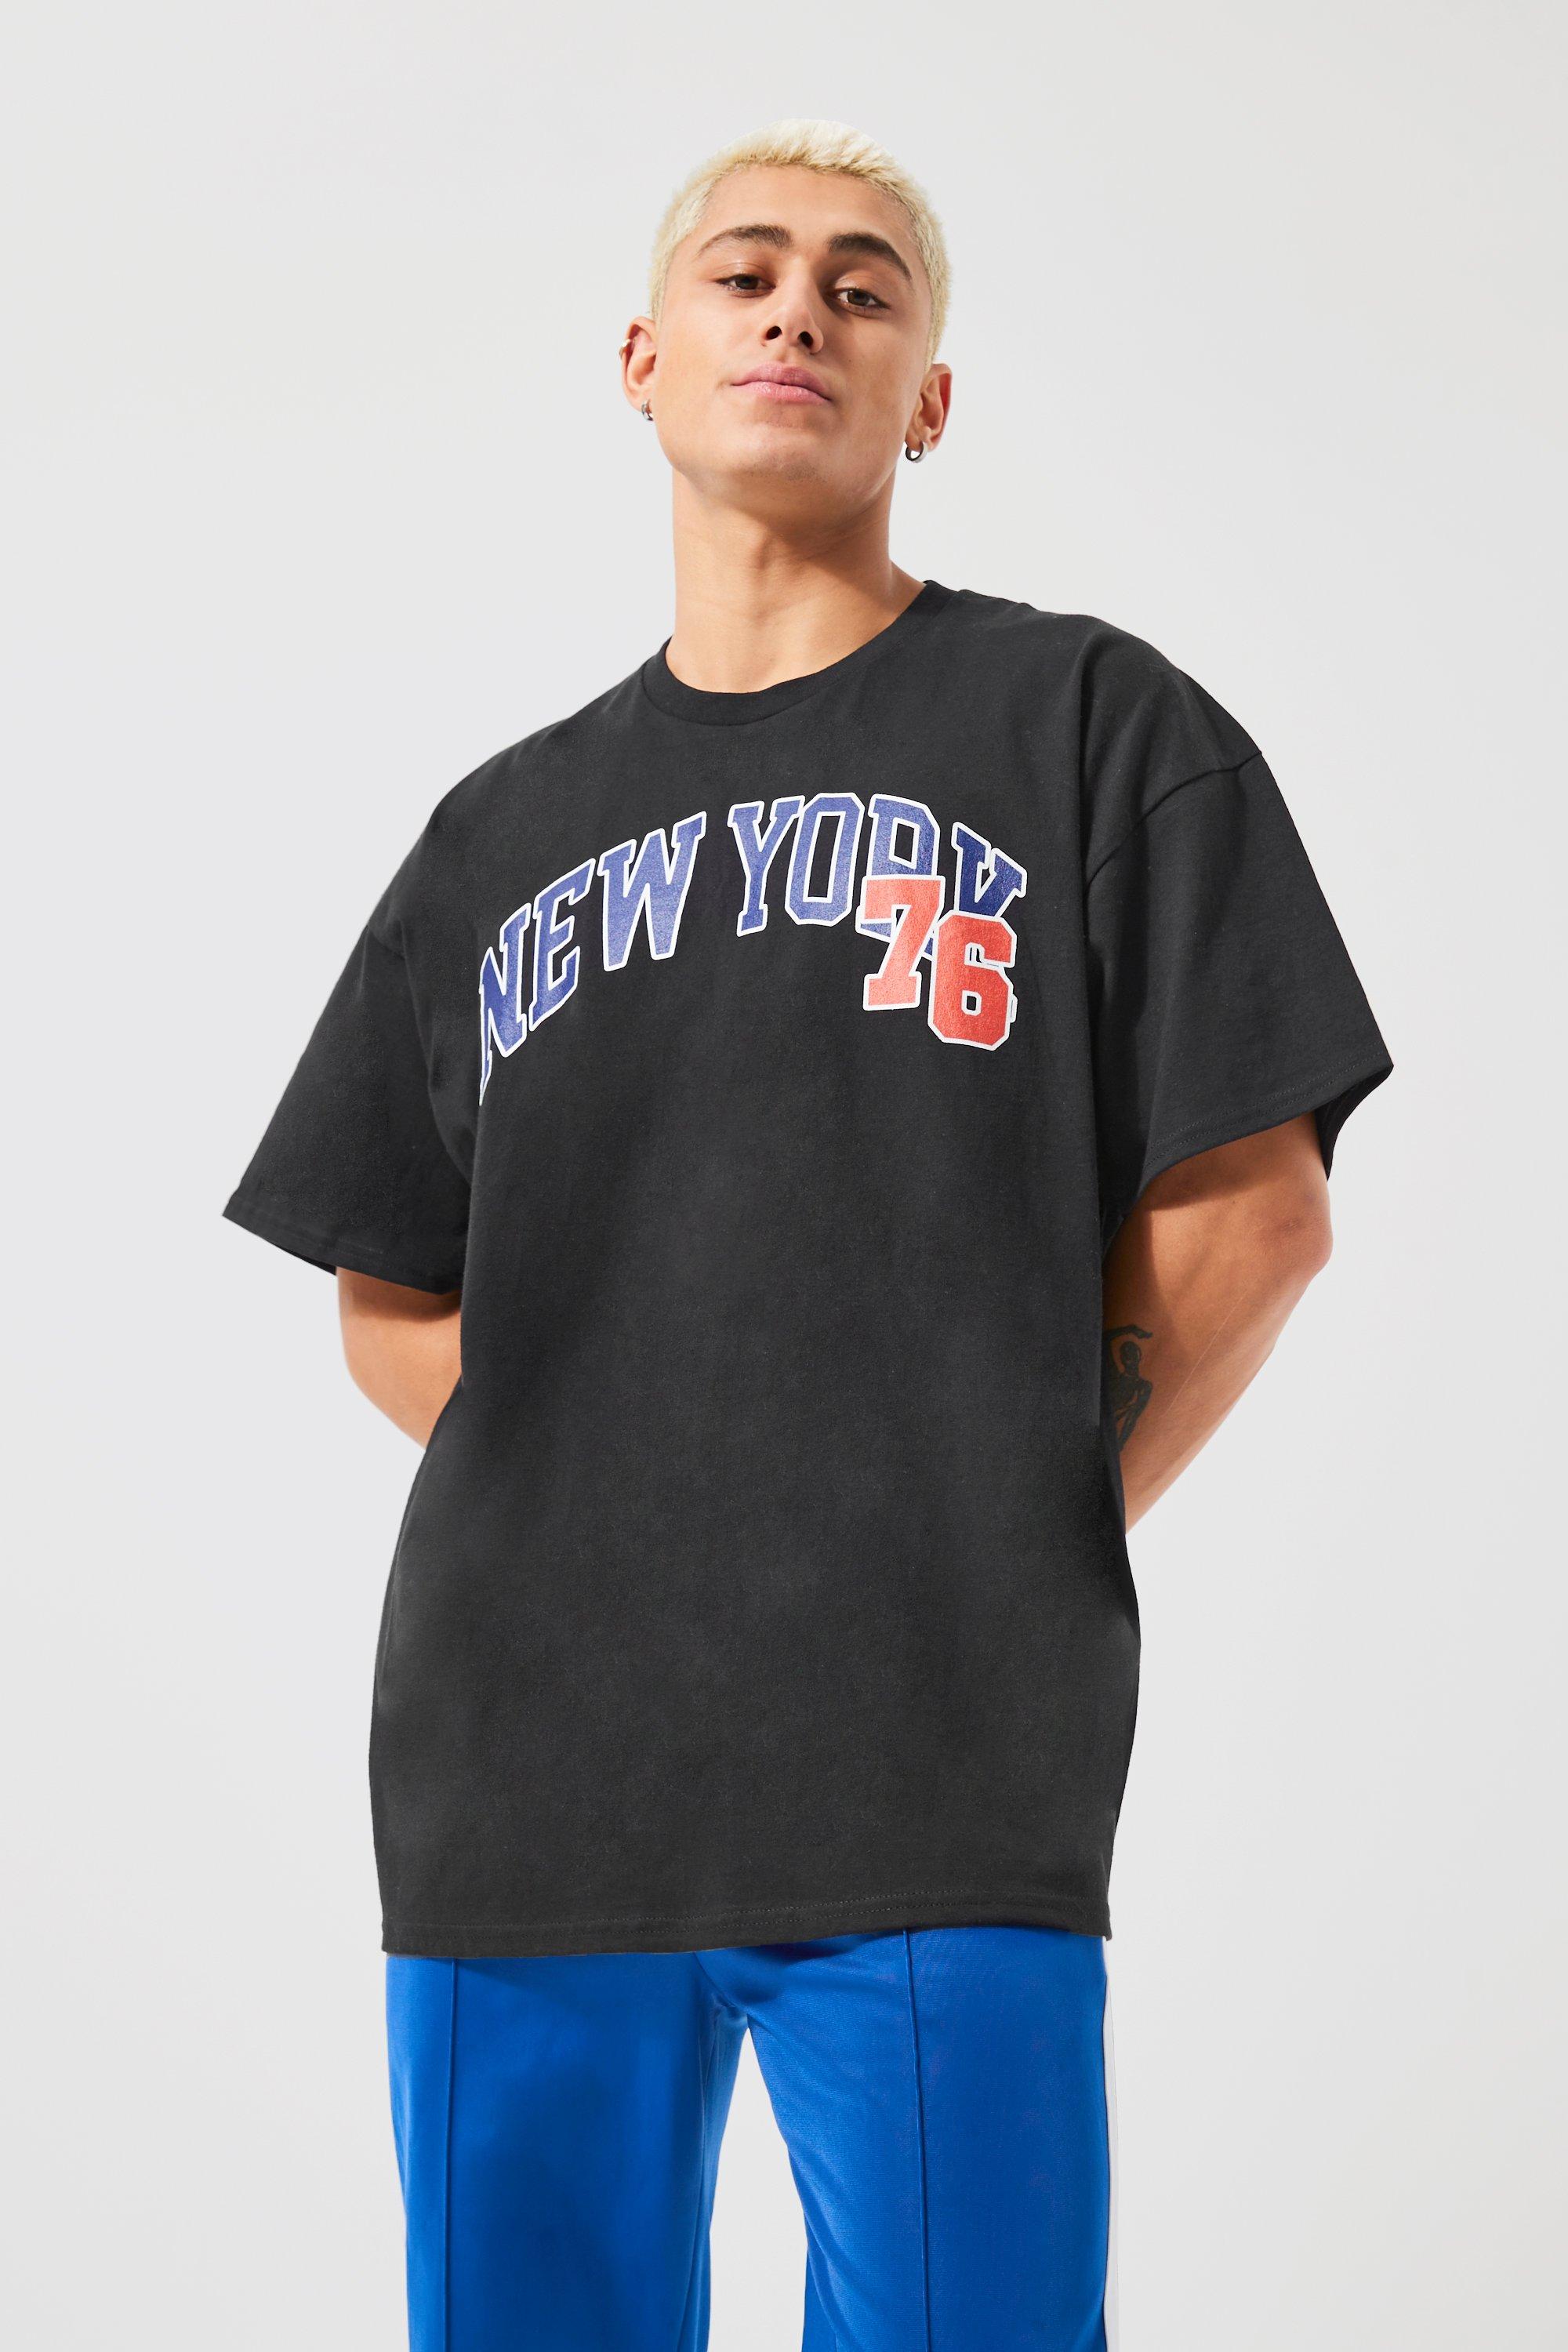 New York Print Oversized T-Shirt